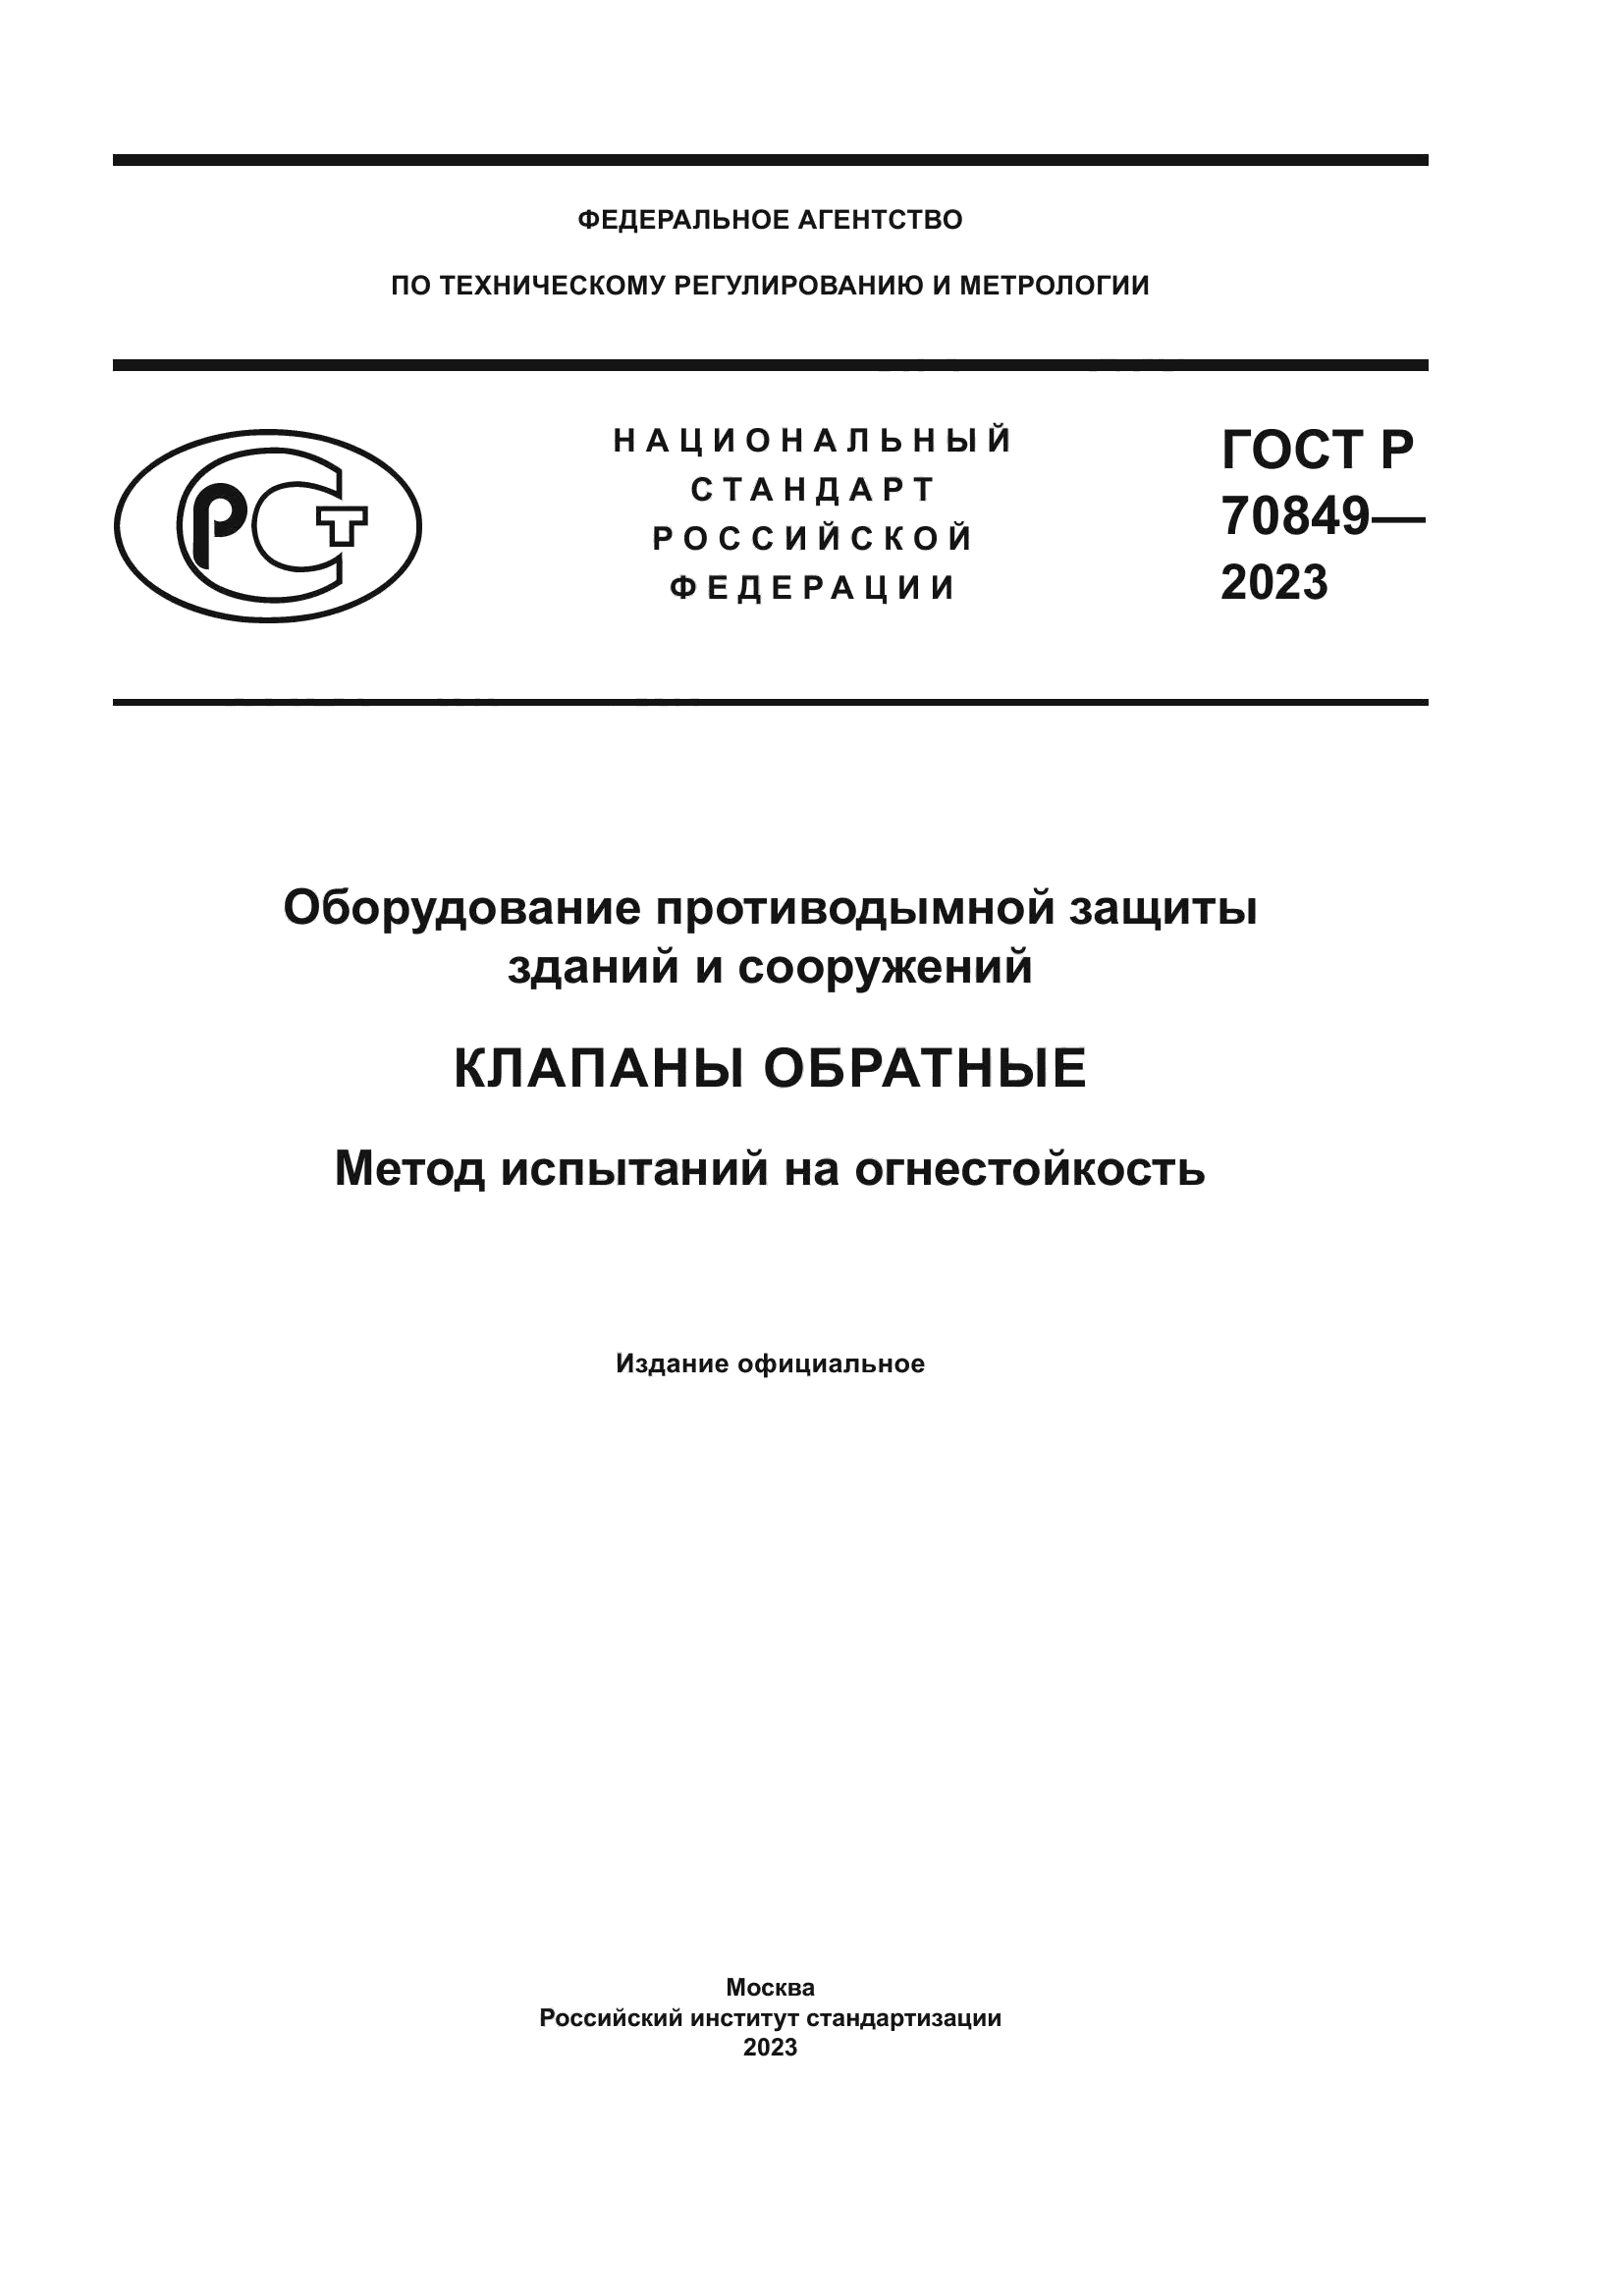 ГОСТ Р 70849-2023